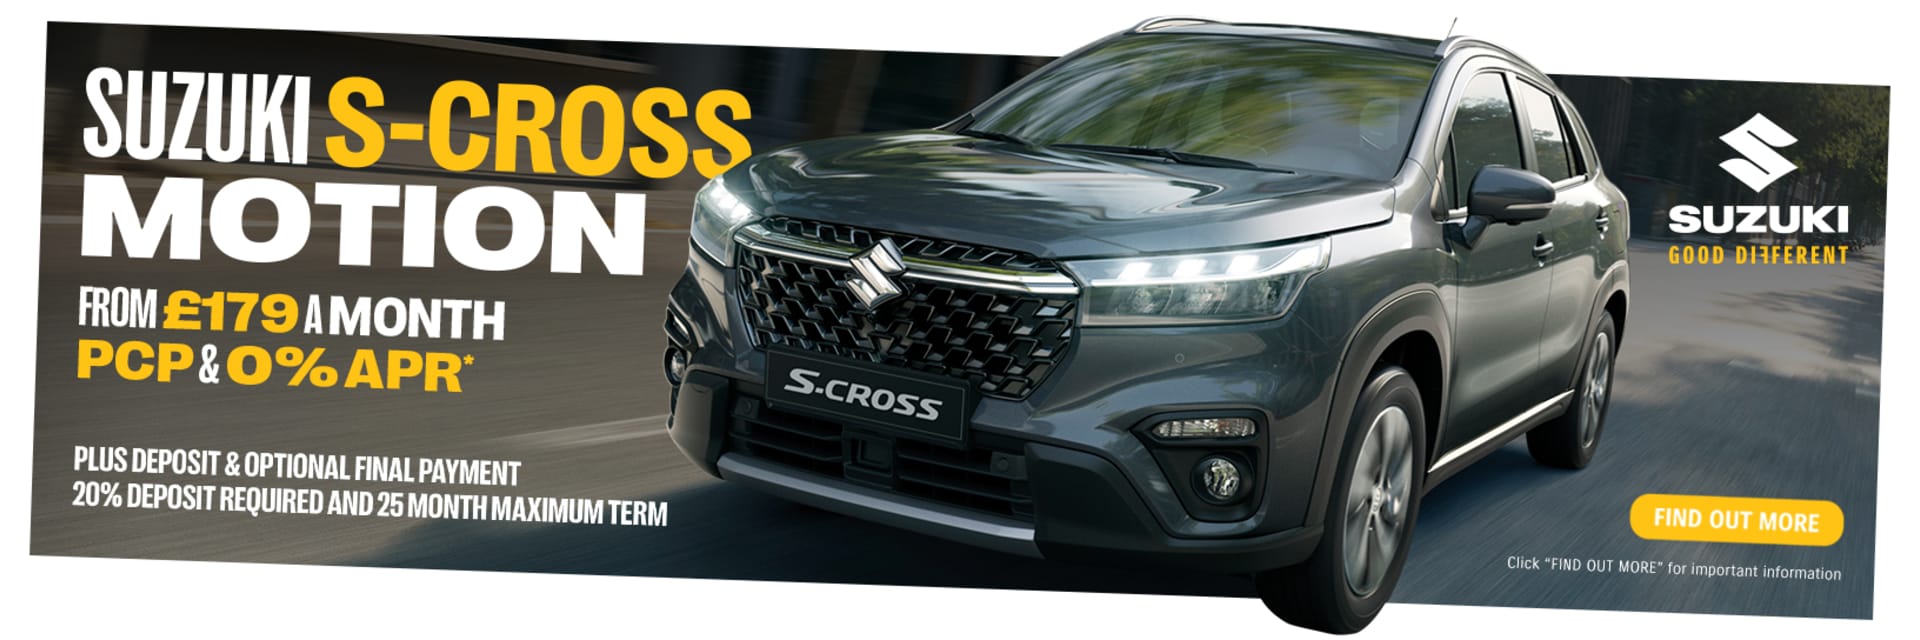 New Suzuki S-CROSS offer